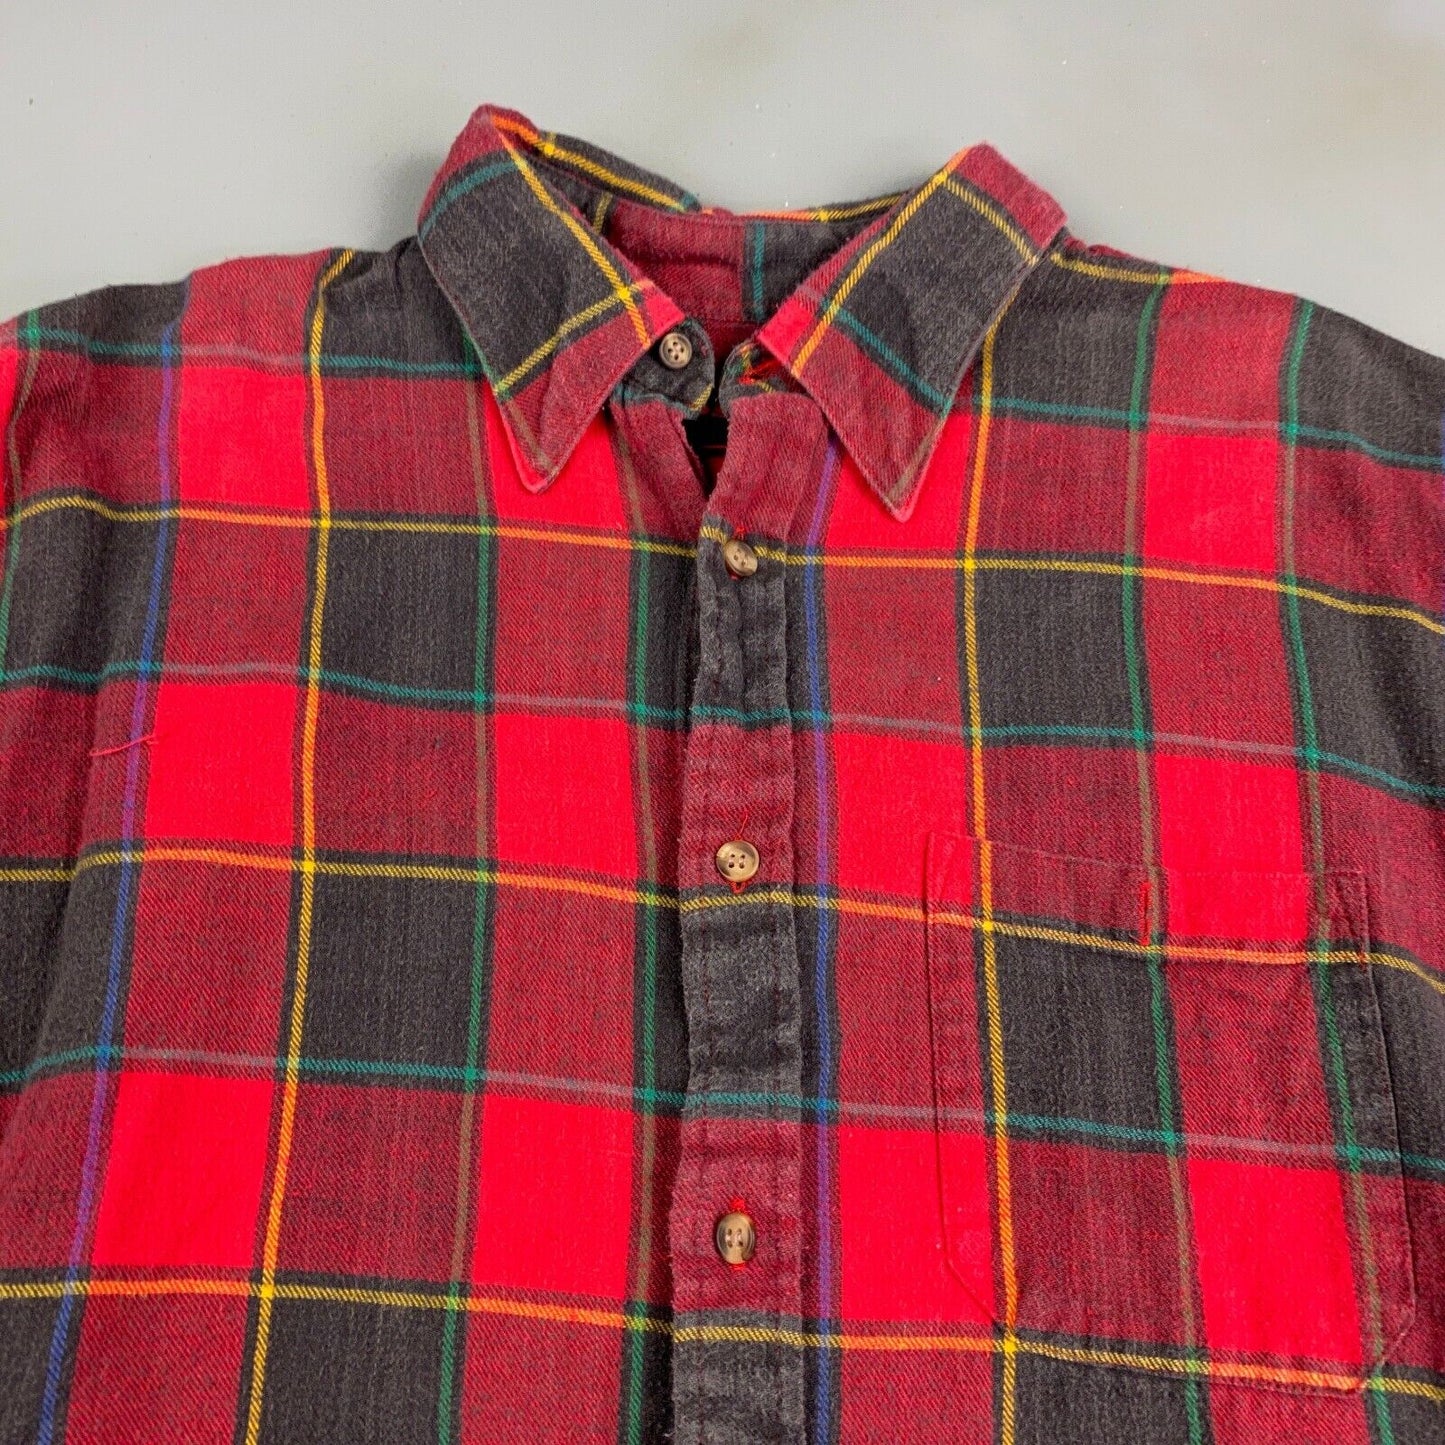 VINTAGE 90s Oshman's Red Plaid Flannel Button Up Shirt sz Large Adult